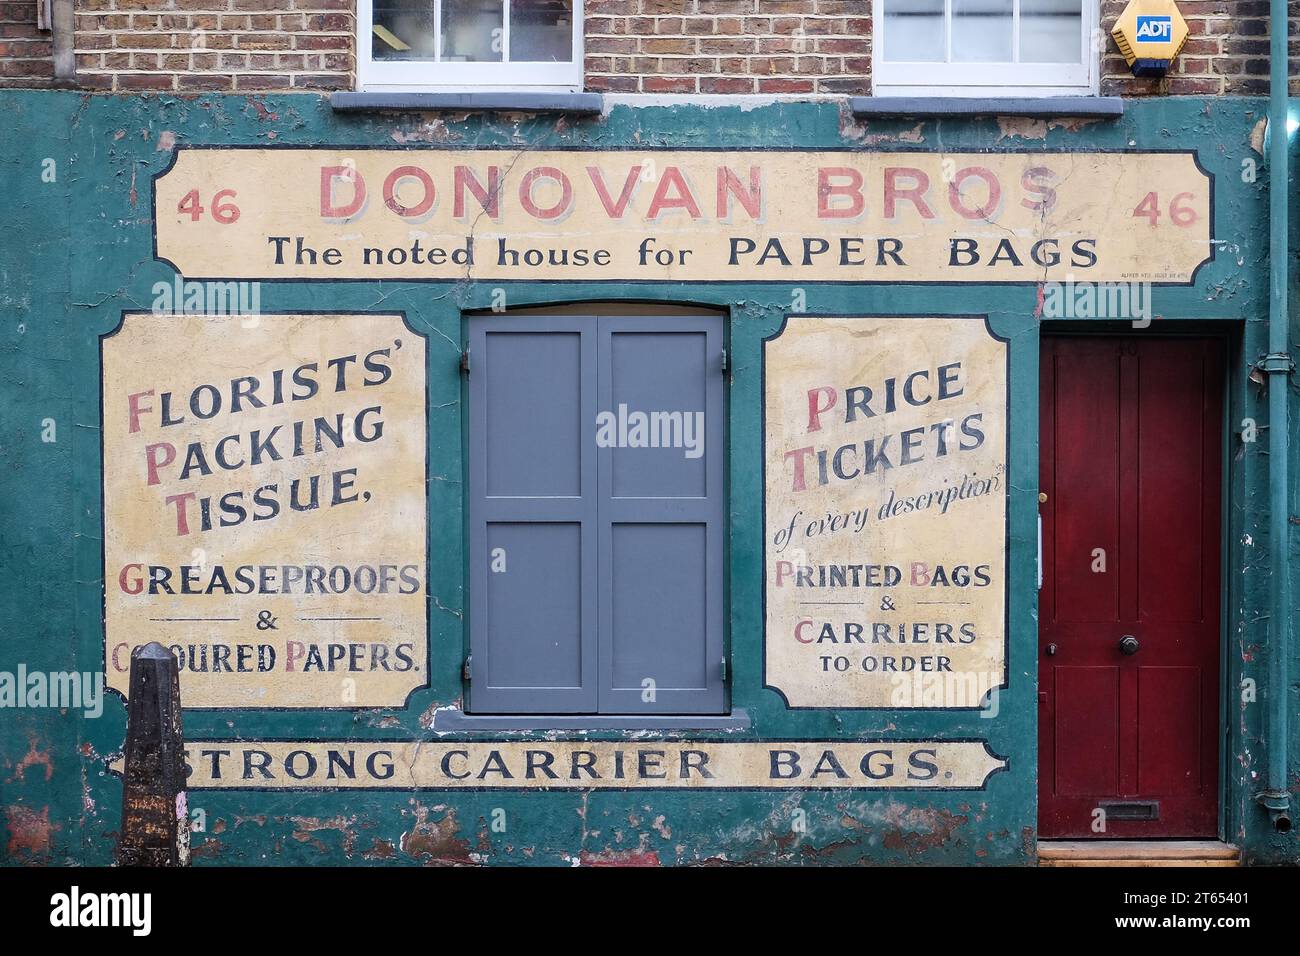 Timeless Elegance: Donovan Bros' vintage storefront in London, a nostalgic glimpse into the city's rich retail history. Stock Photo